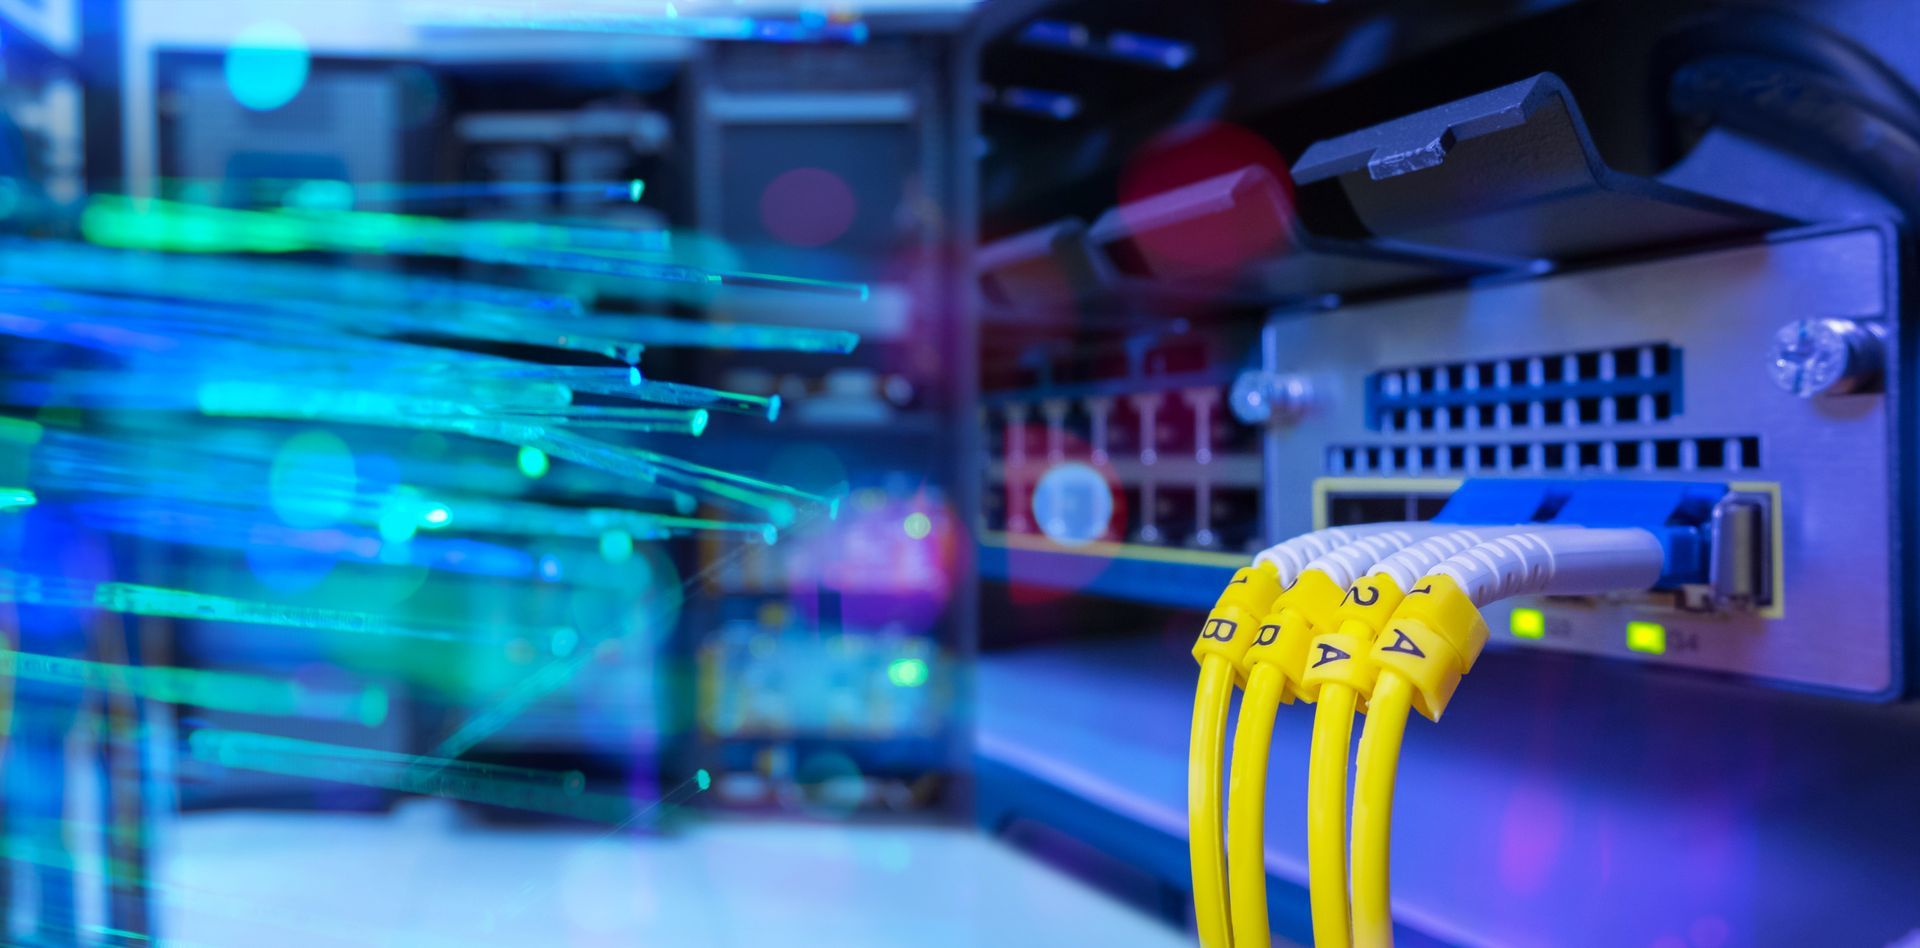 Colorful multimode optical fiber delivers high bandwidth data